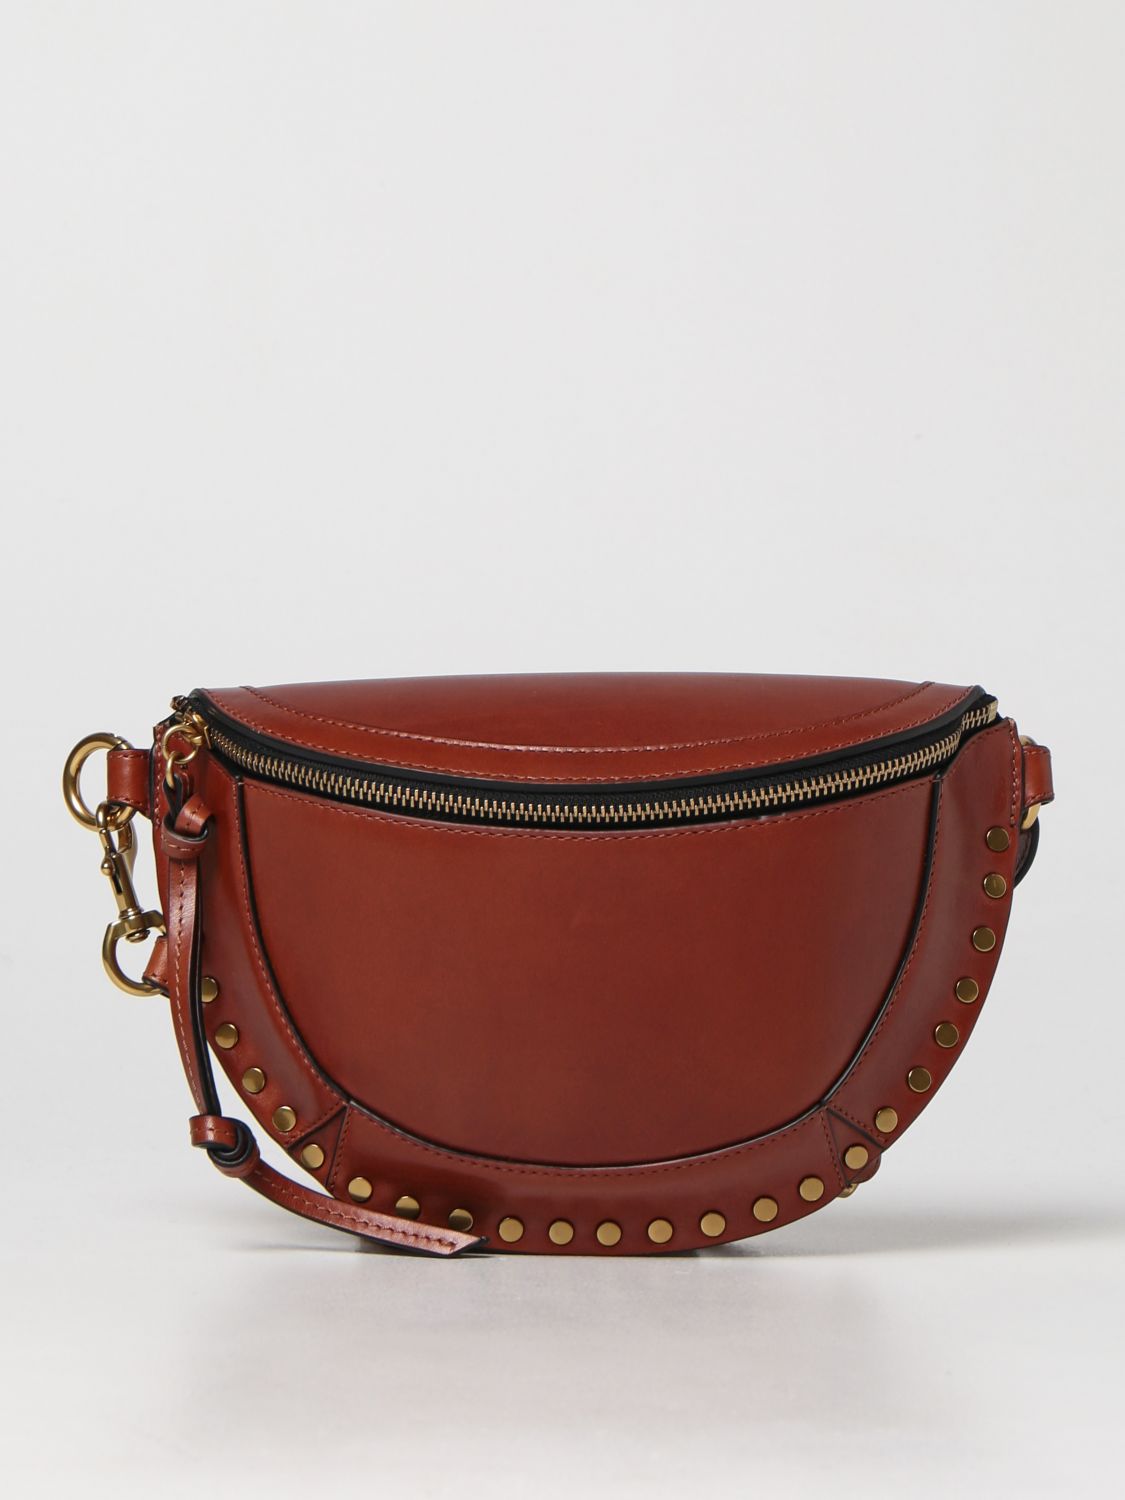 ISABEL MARANT: Skano leather bag / pouch - Beige | Isabel Marant ...